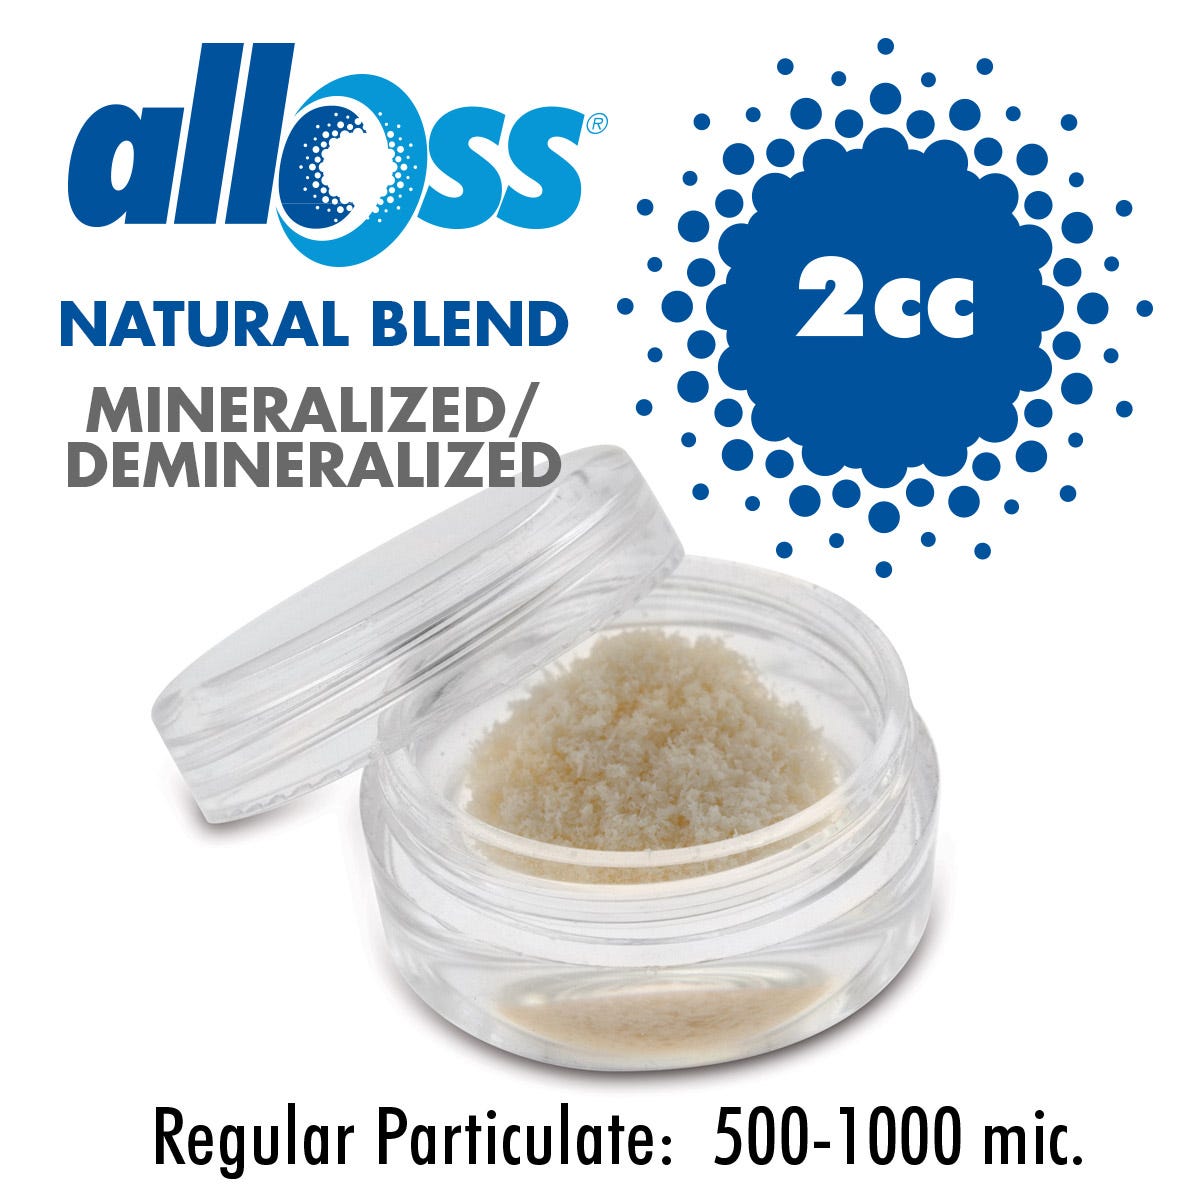 alloOssÂ® Natural Blend Mineralized/Demineralized Particulate 500-1000um (2.0cc)